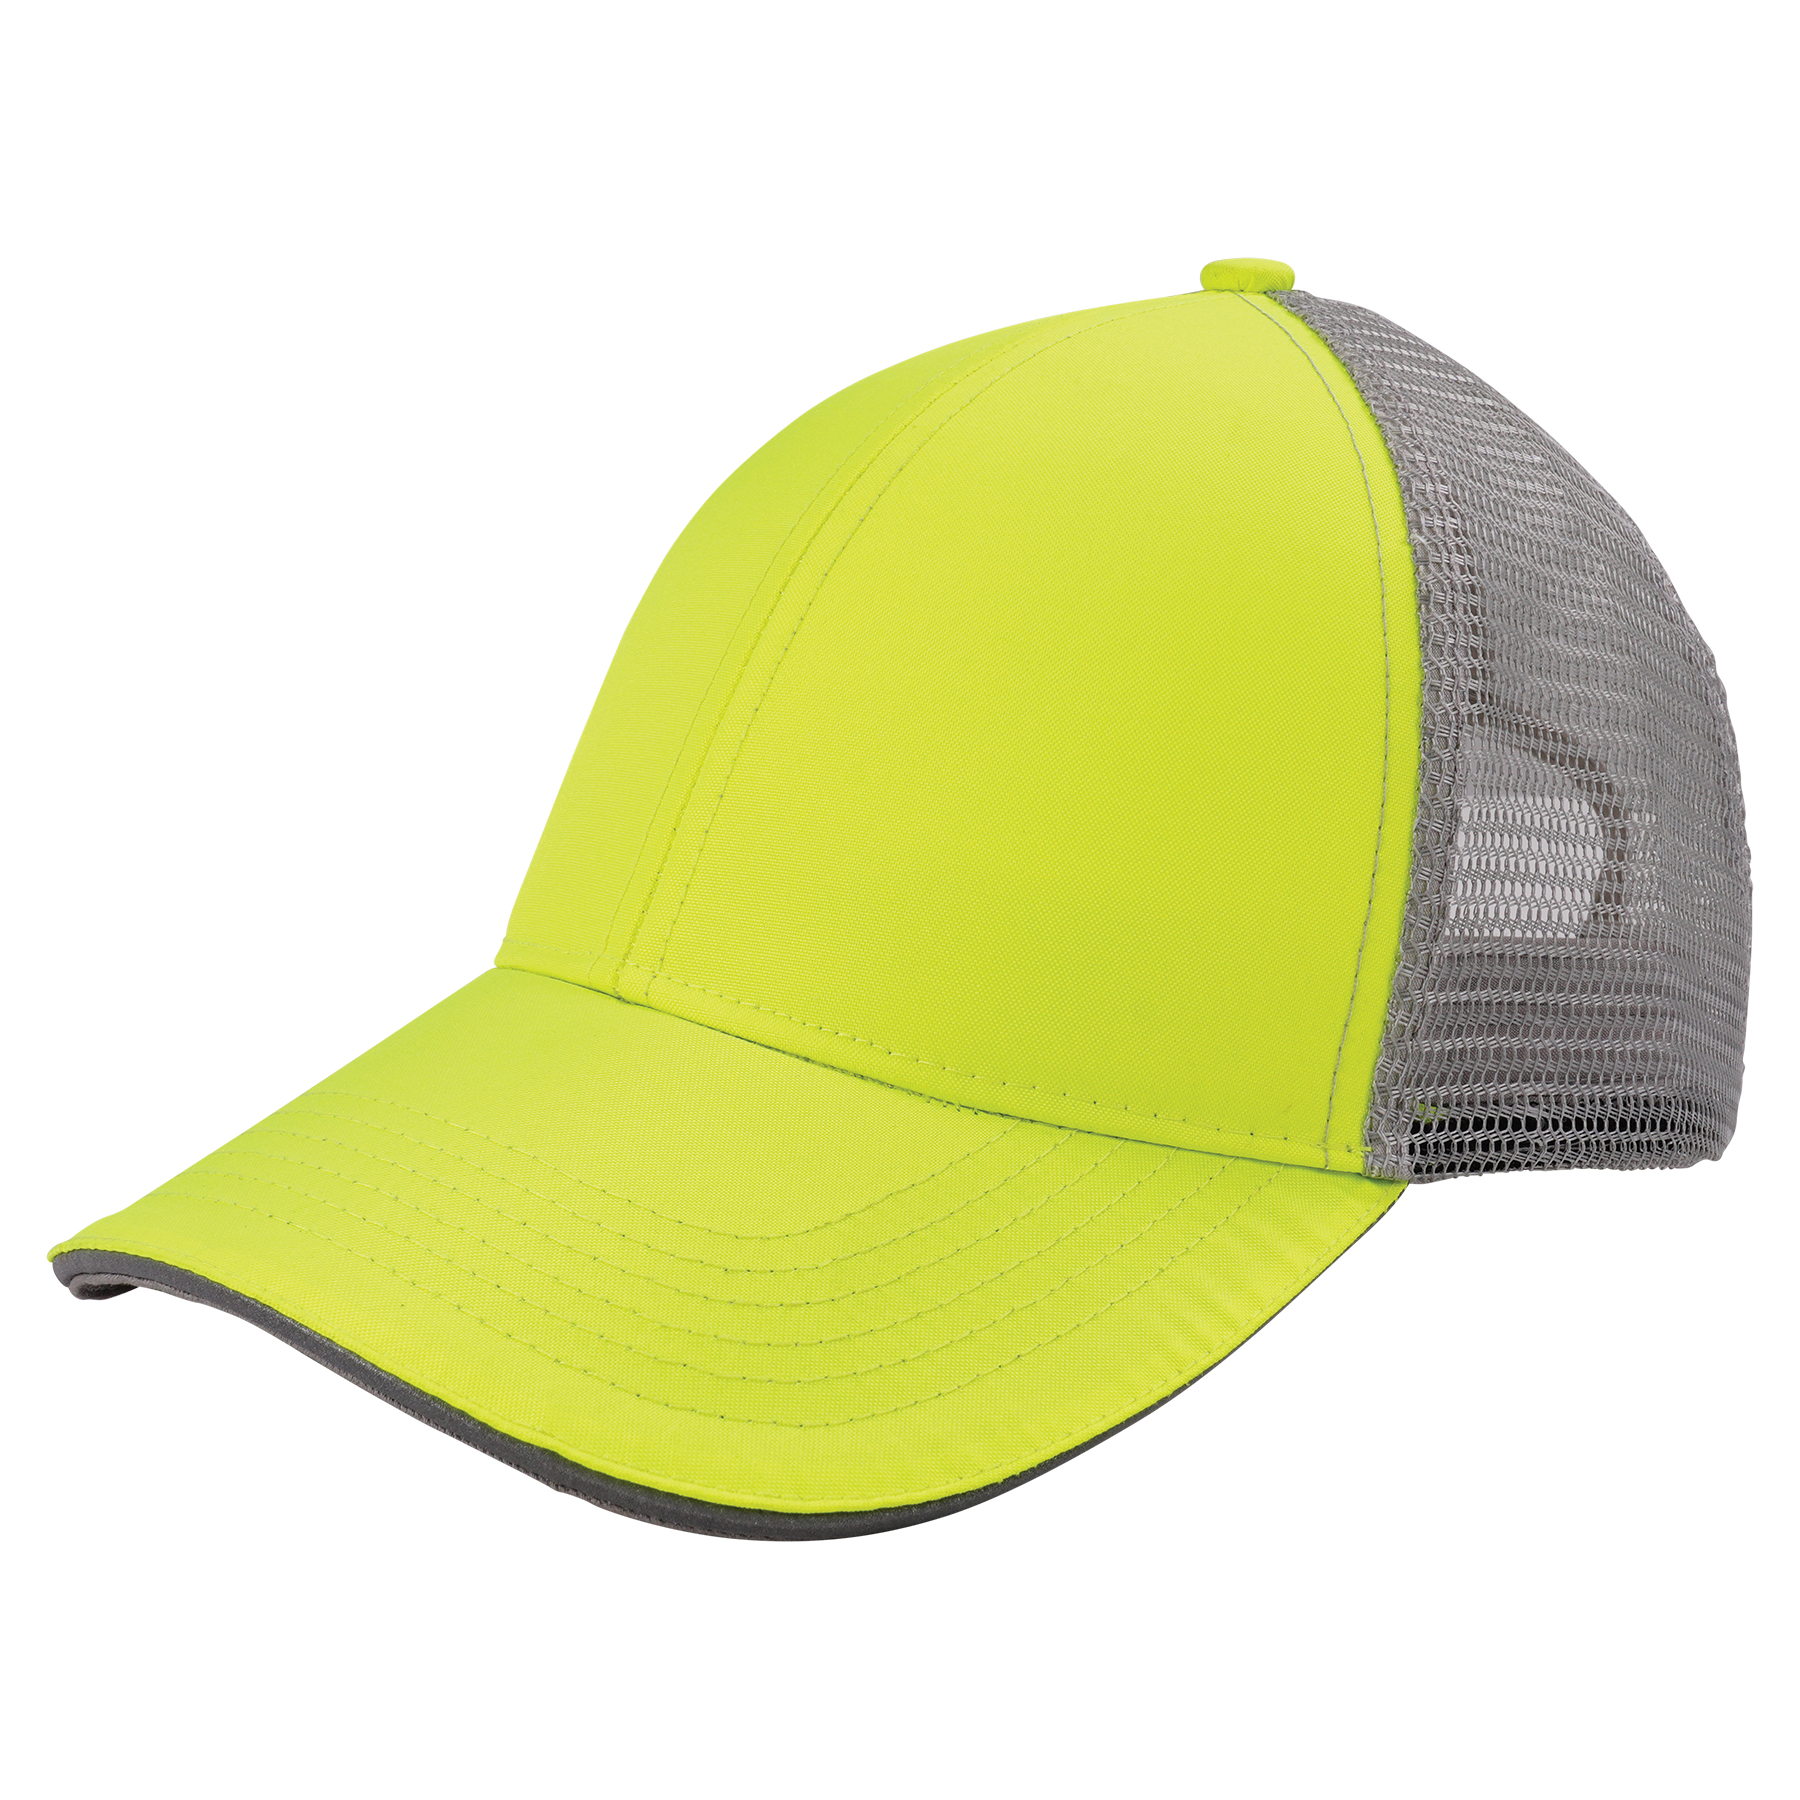 3 Pack Plain Strapback Baseball Hat Adjustable One Size Fits Most